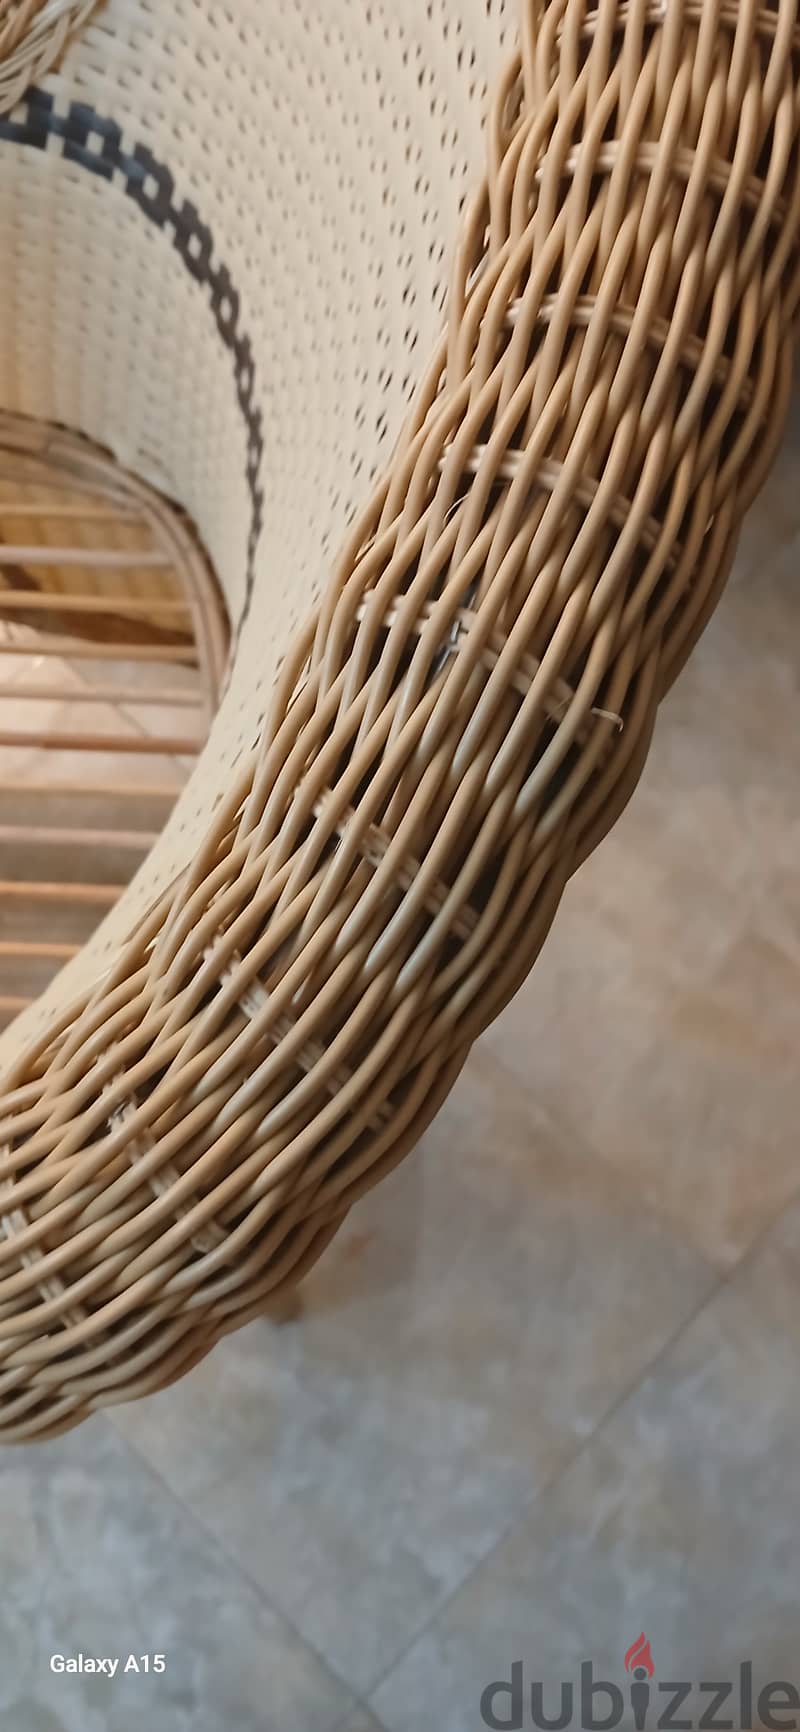 Bamboo chair 5